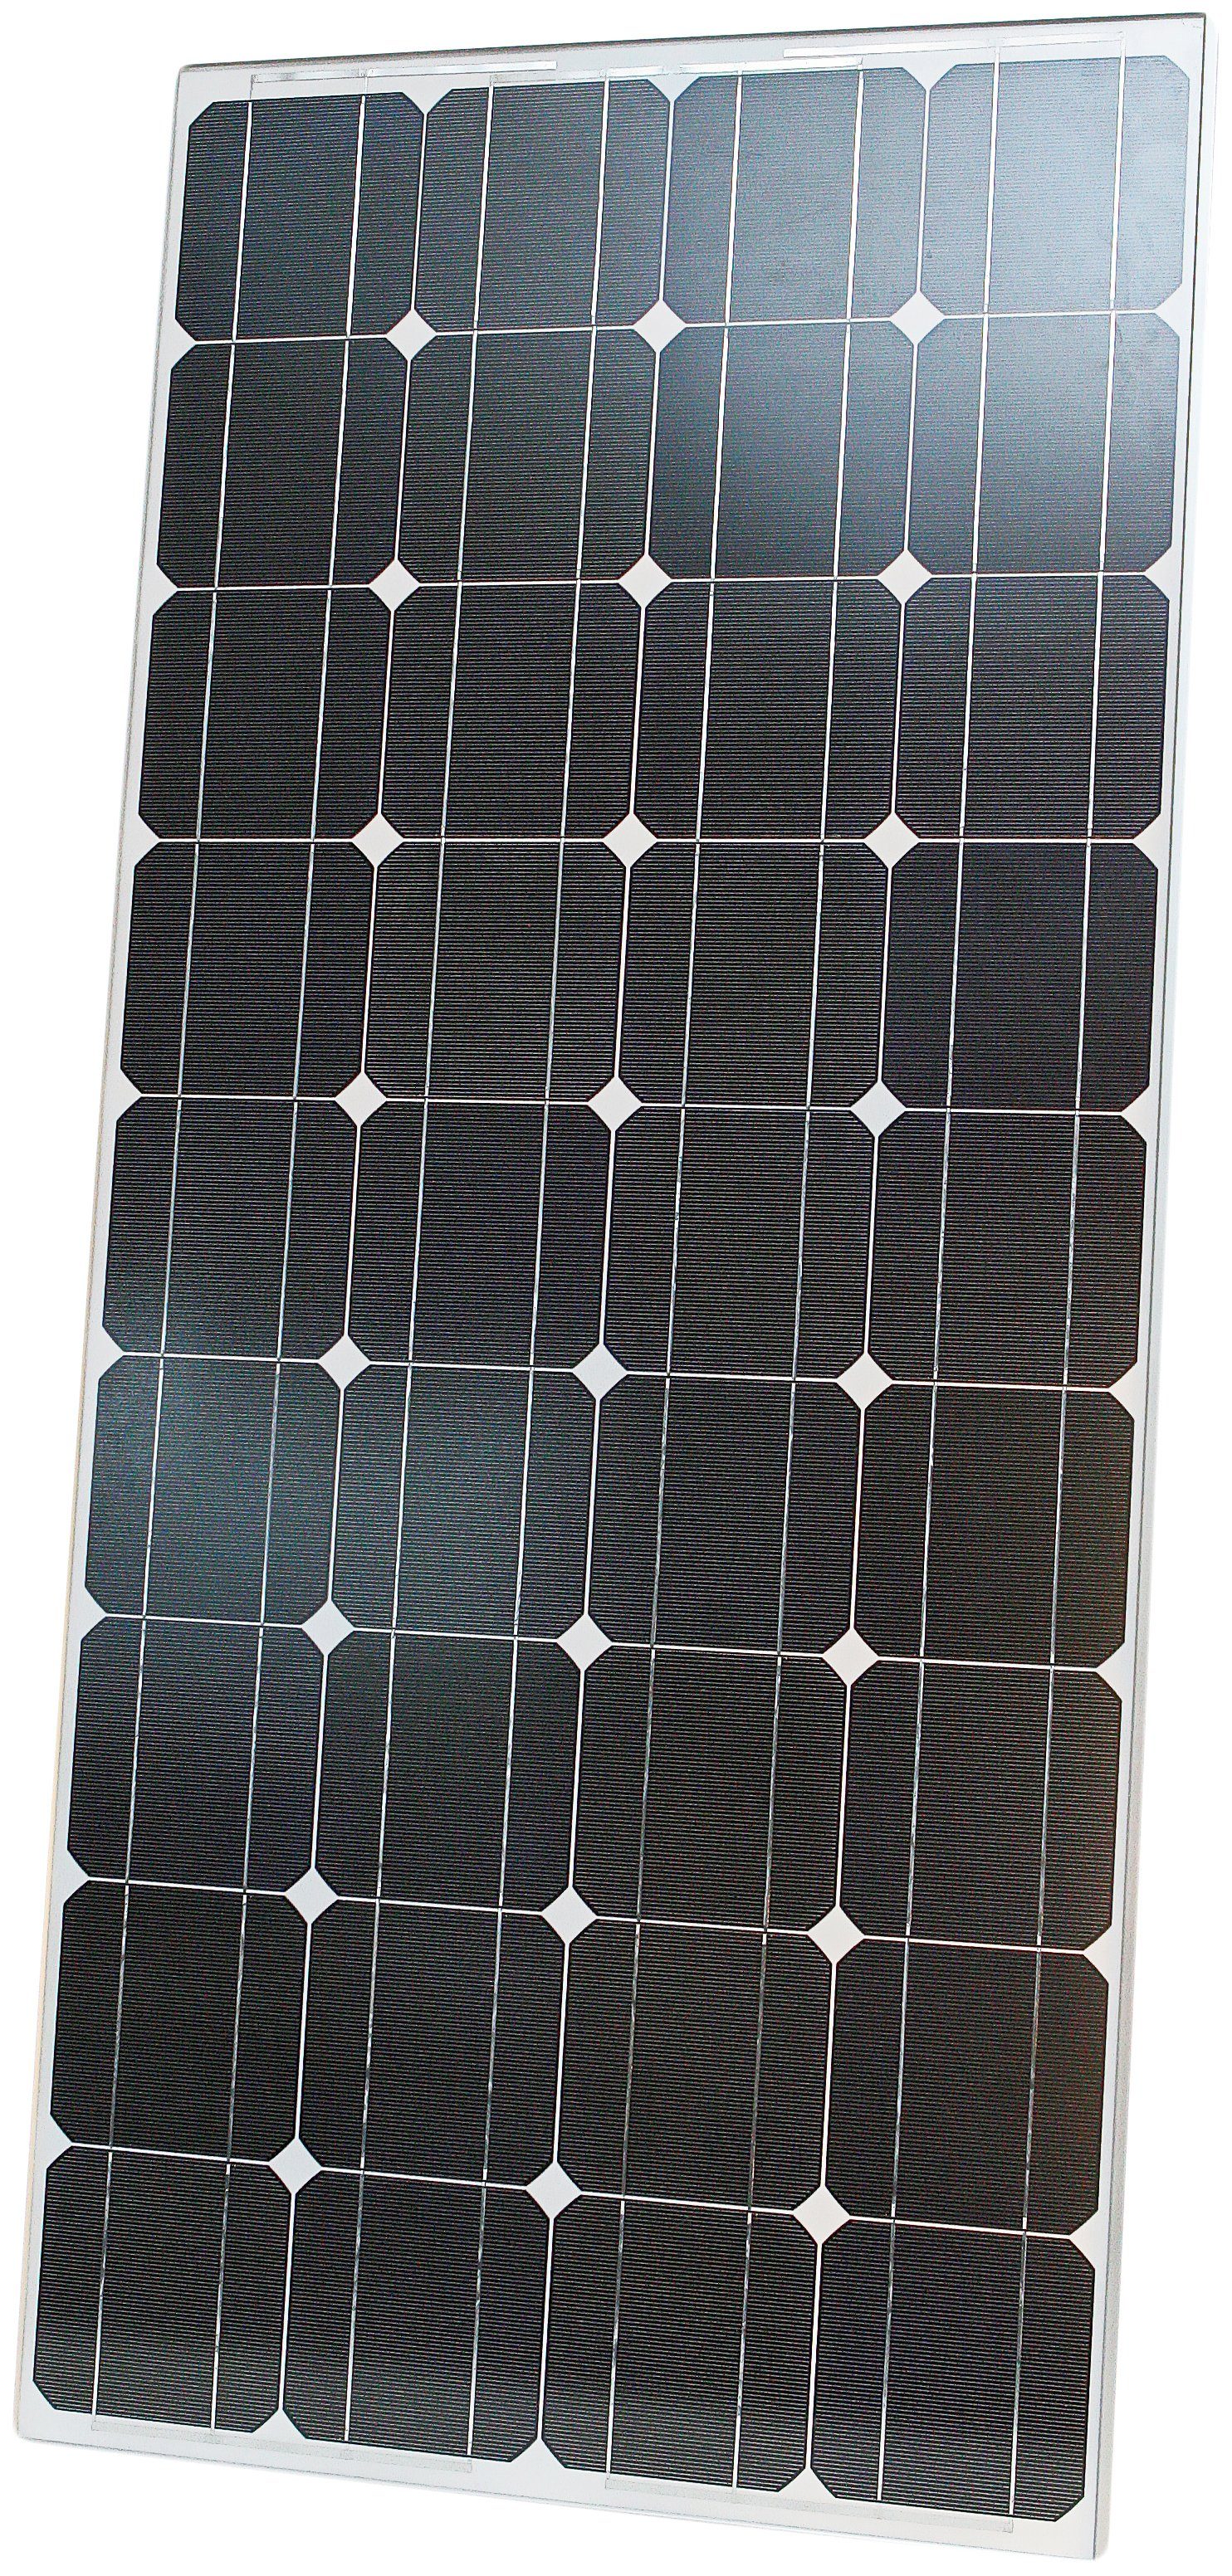 Sunset Solarmodul AS 180, 180 Watt, 180 W, Monokristallin, für Gartenhäuser oder Reisemobil